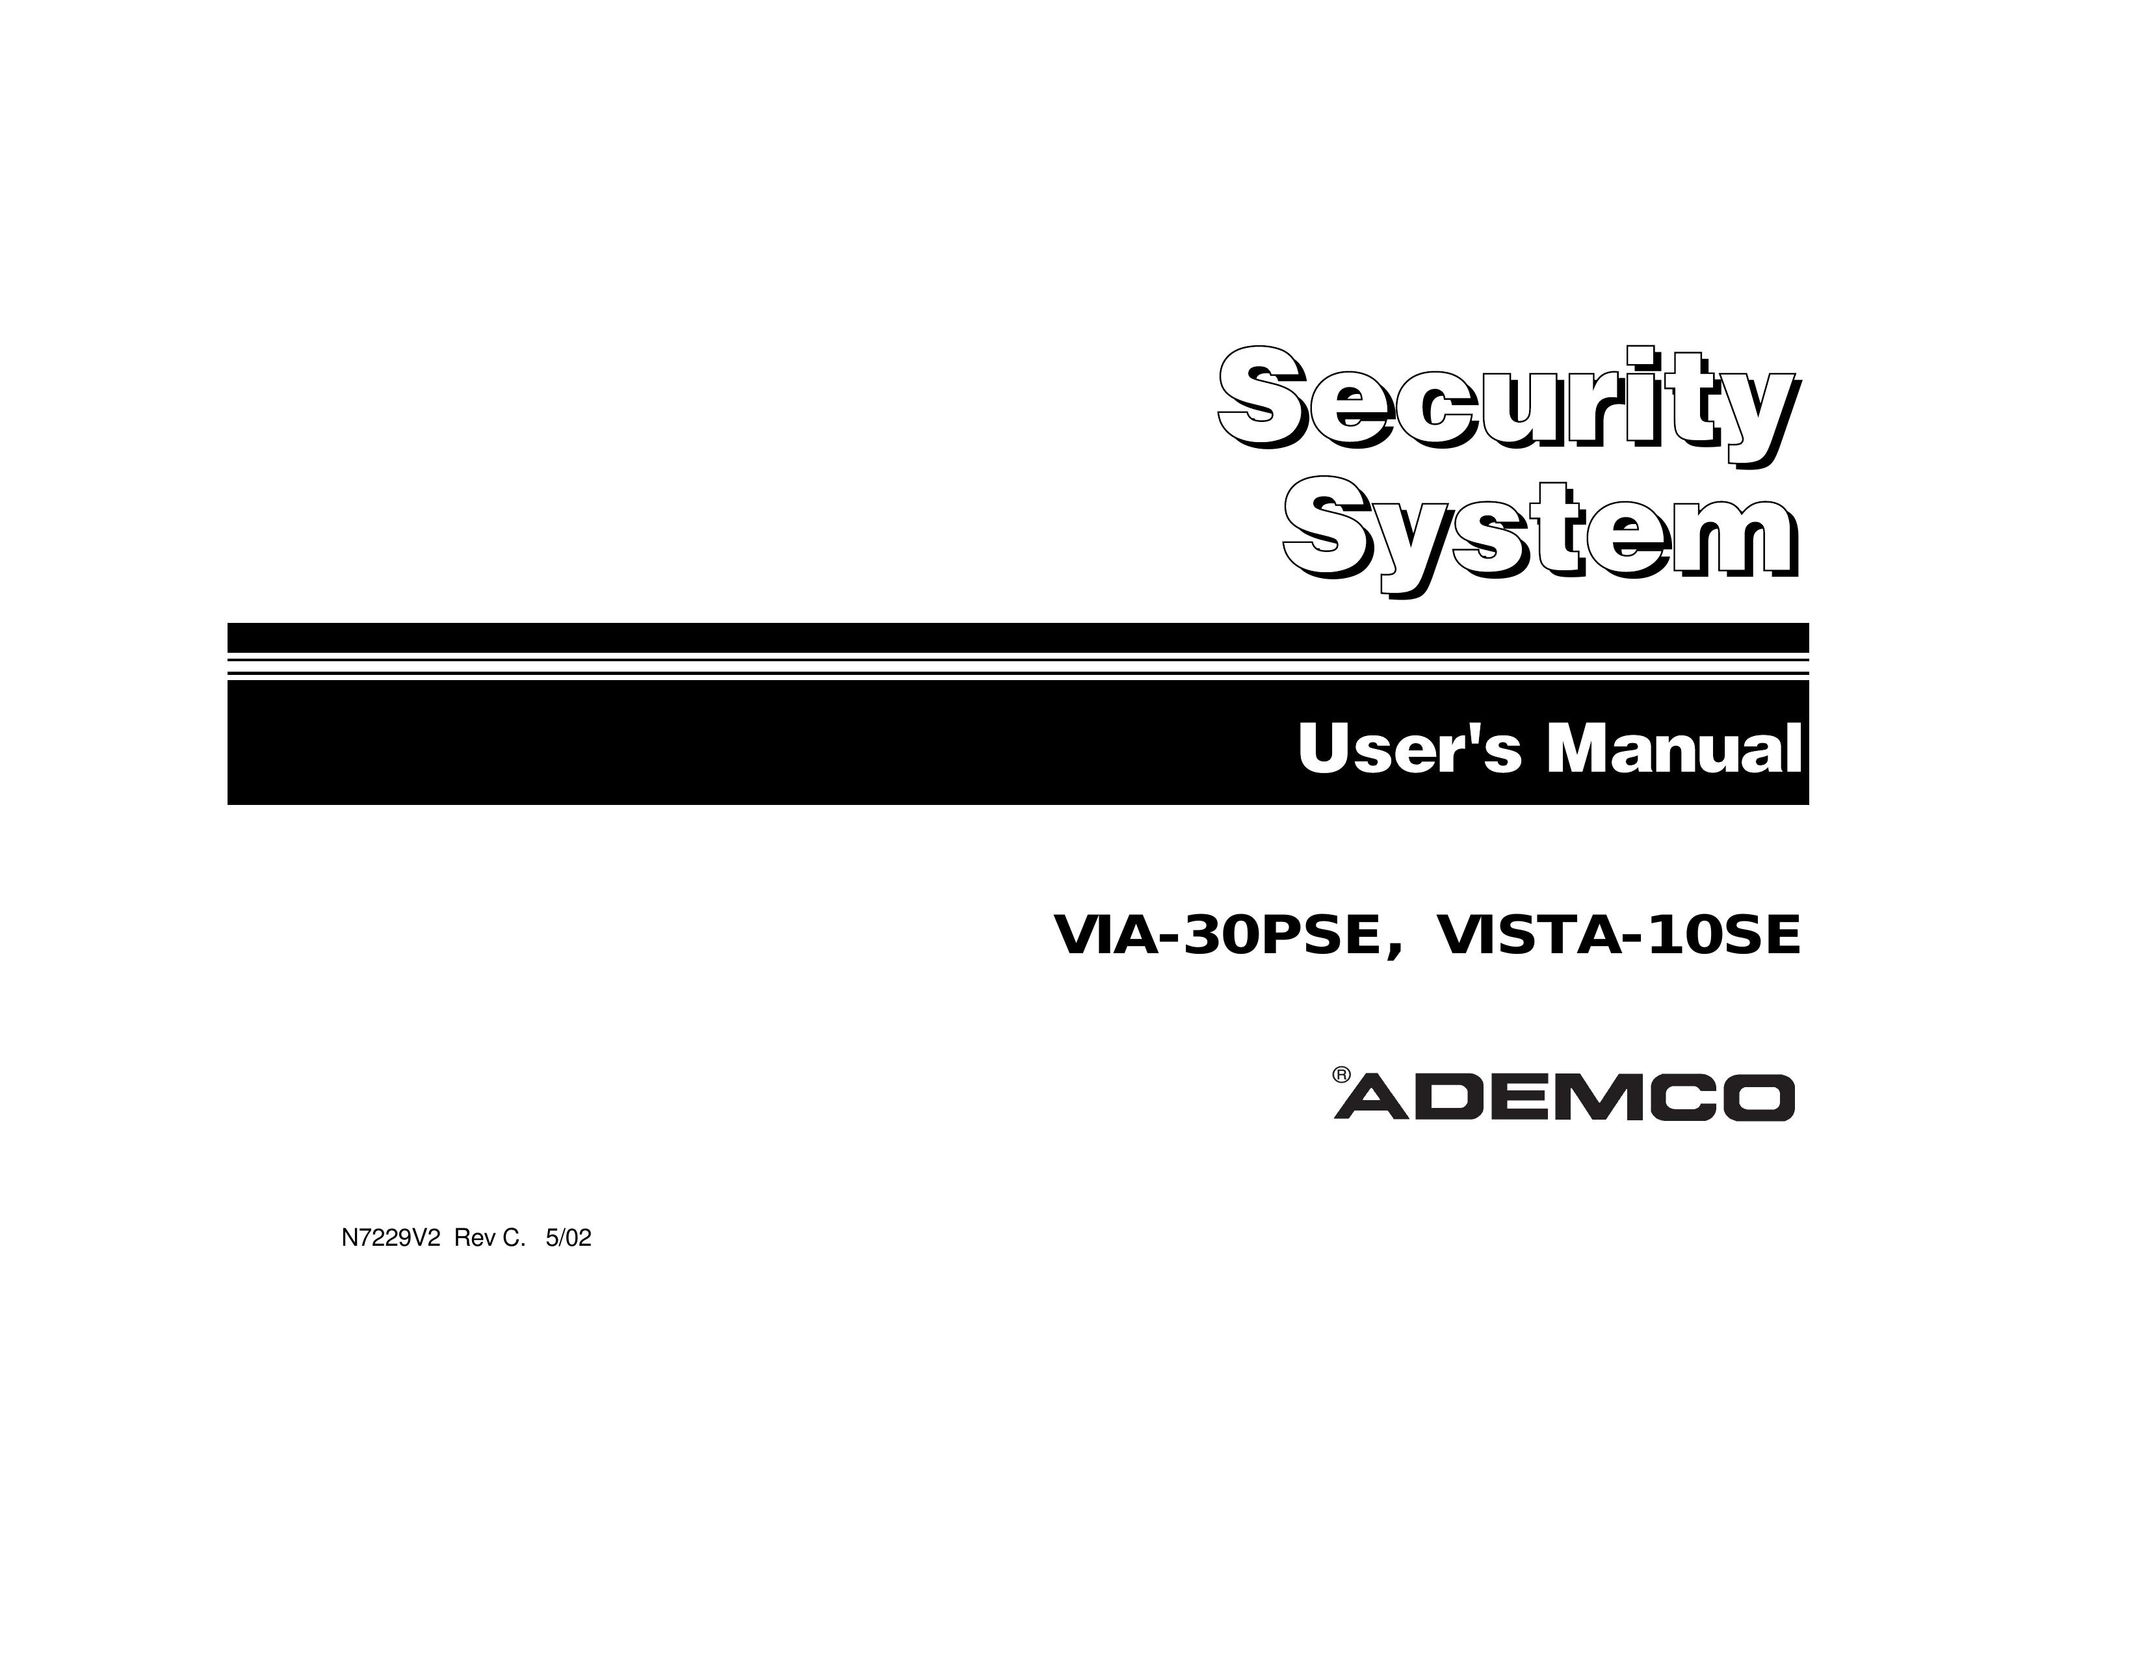 Planar VISTA-10SE Home Security System User Manual